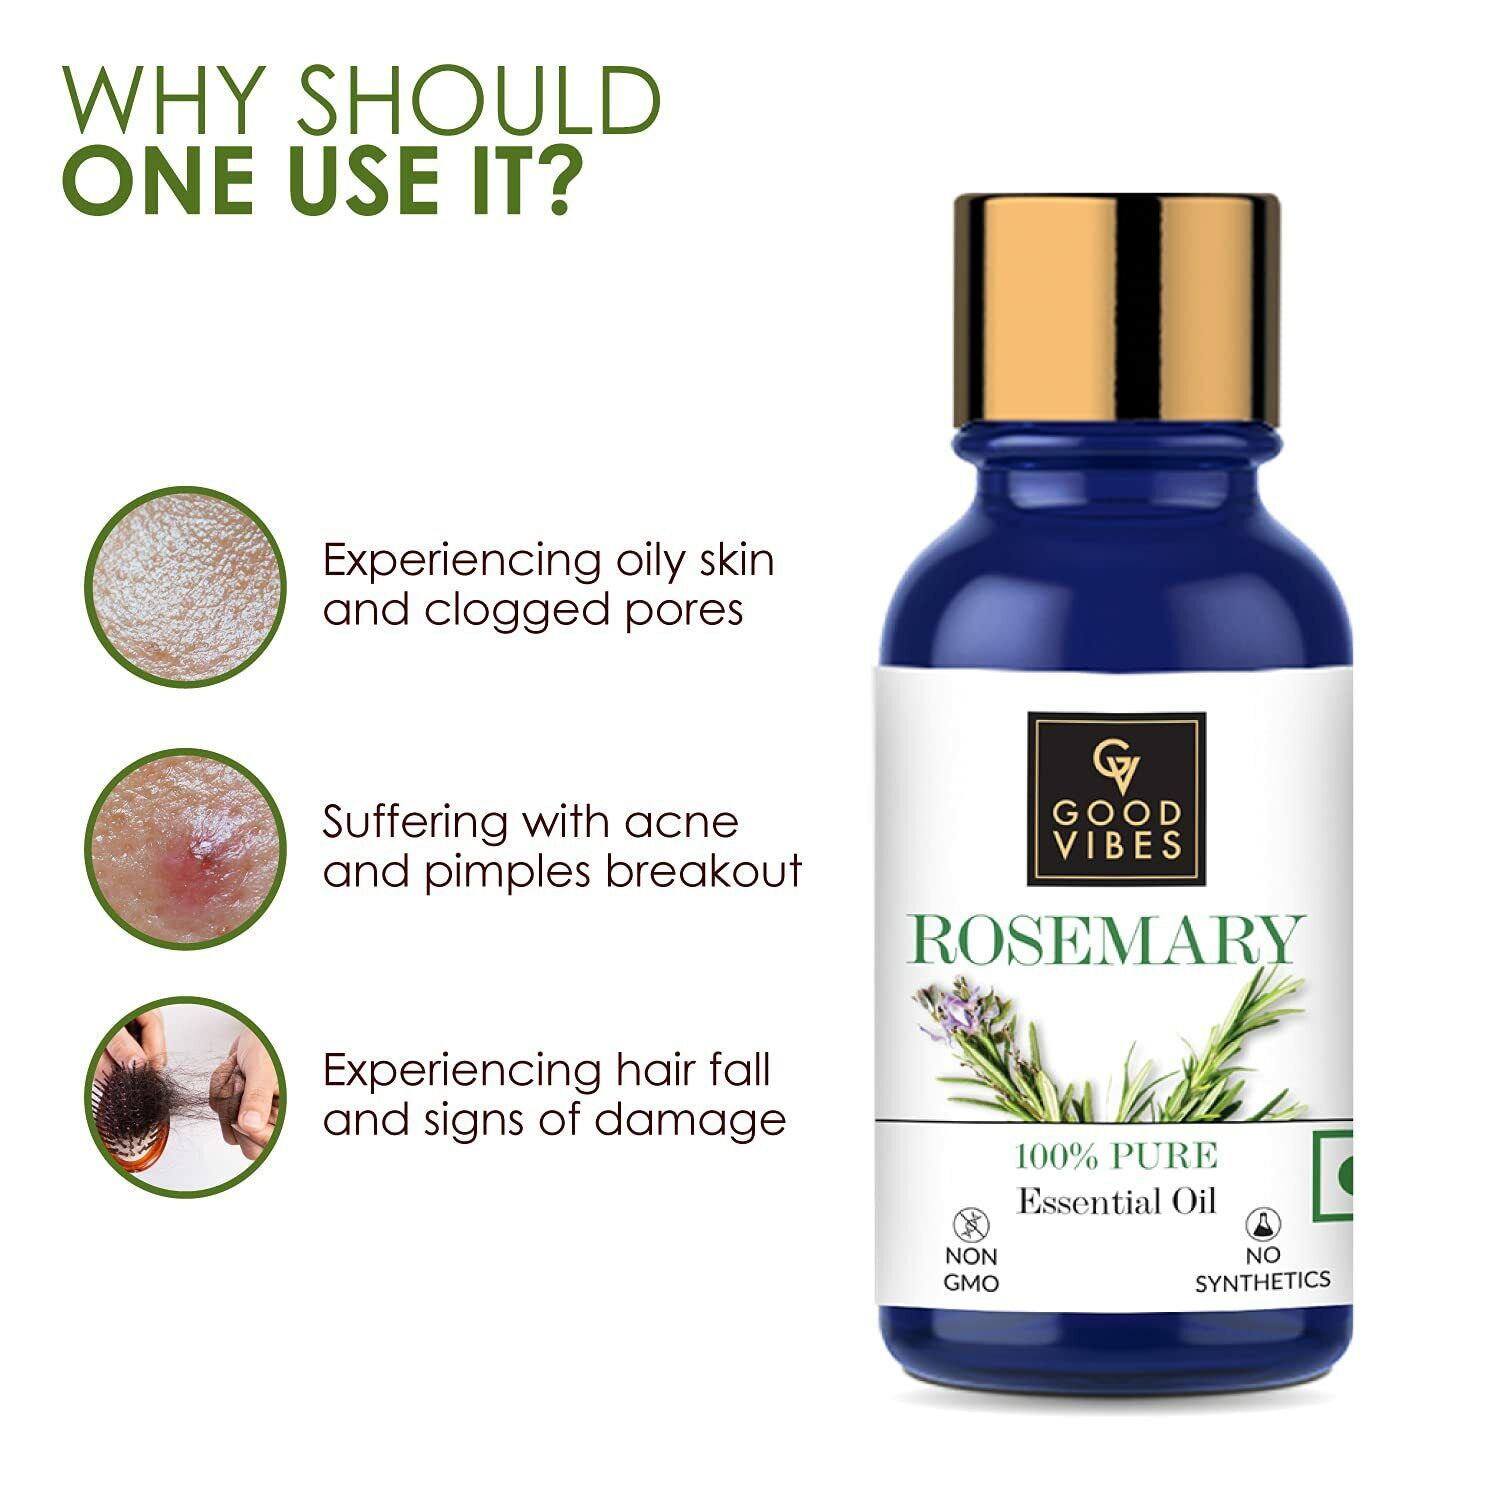 Good Vibes 100% Pure Rosemary Essential Oil Stimulates Hair Growth 10ml |  eBay